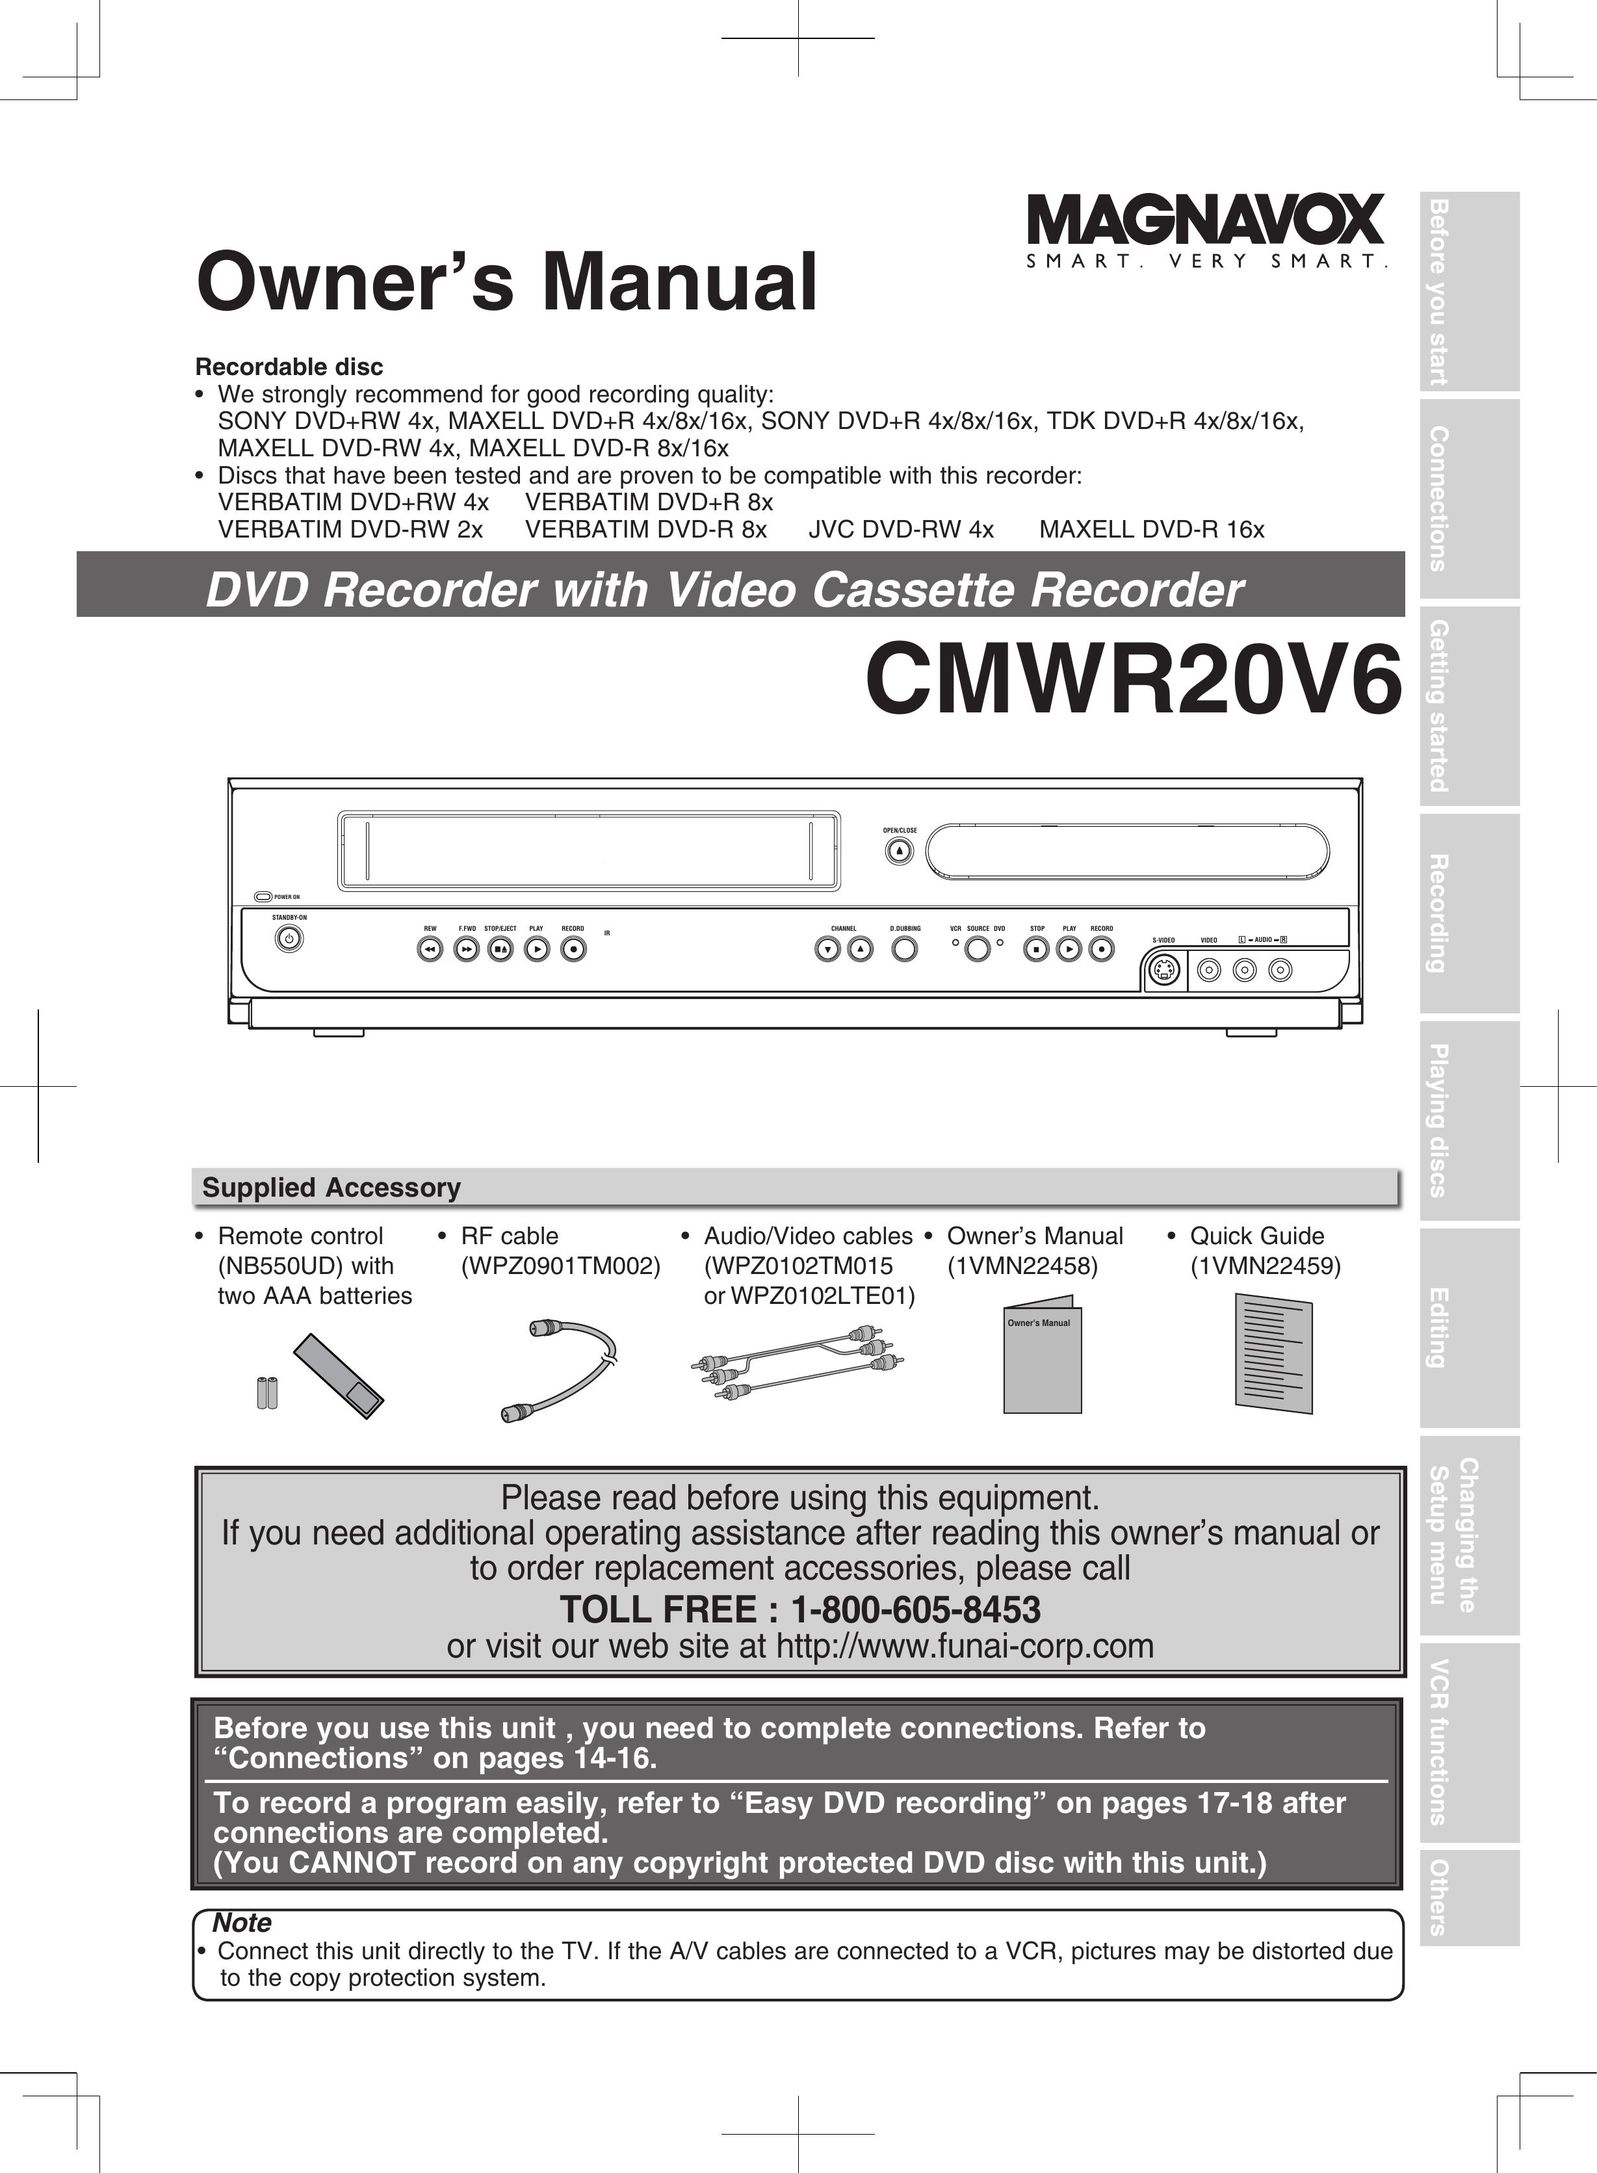 Magnavox cmwR20v6 DVD VCR Combo User Manual